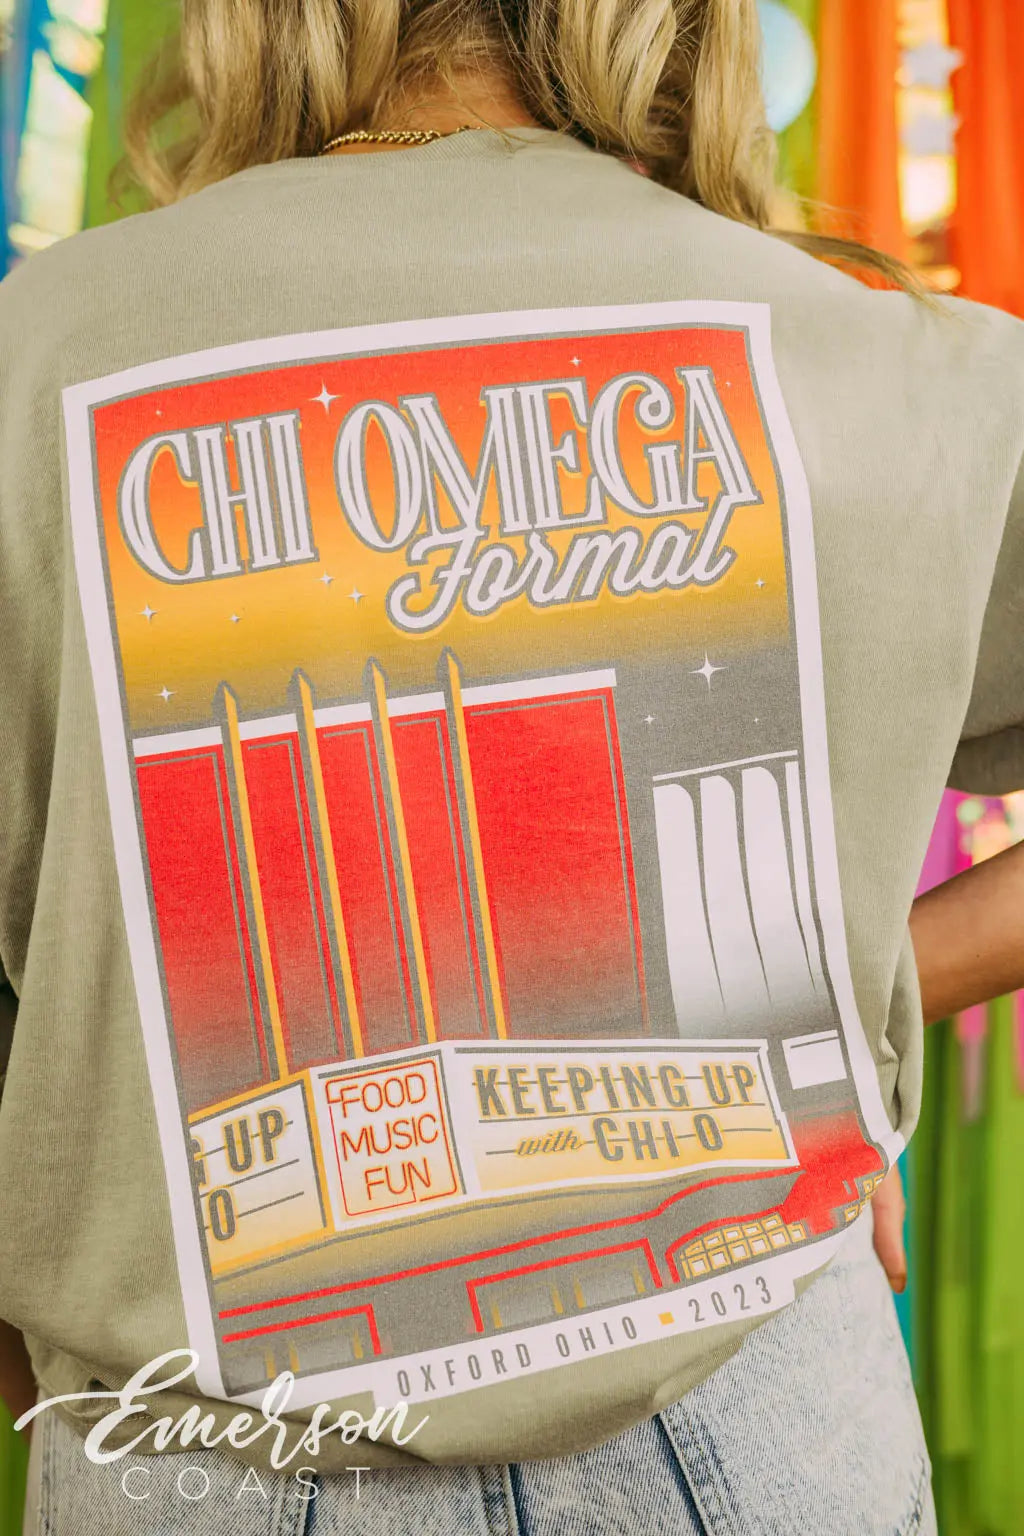 Chi Omega Keeping Up With Chi O Formal Tshirt